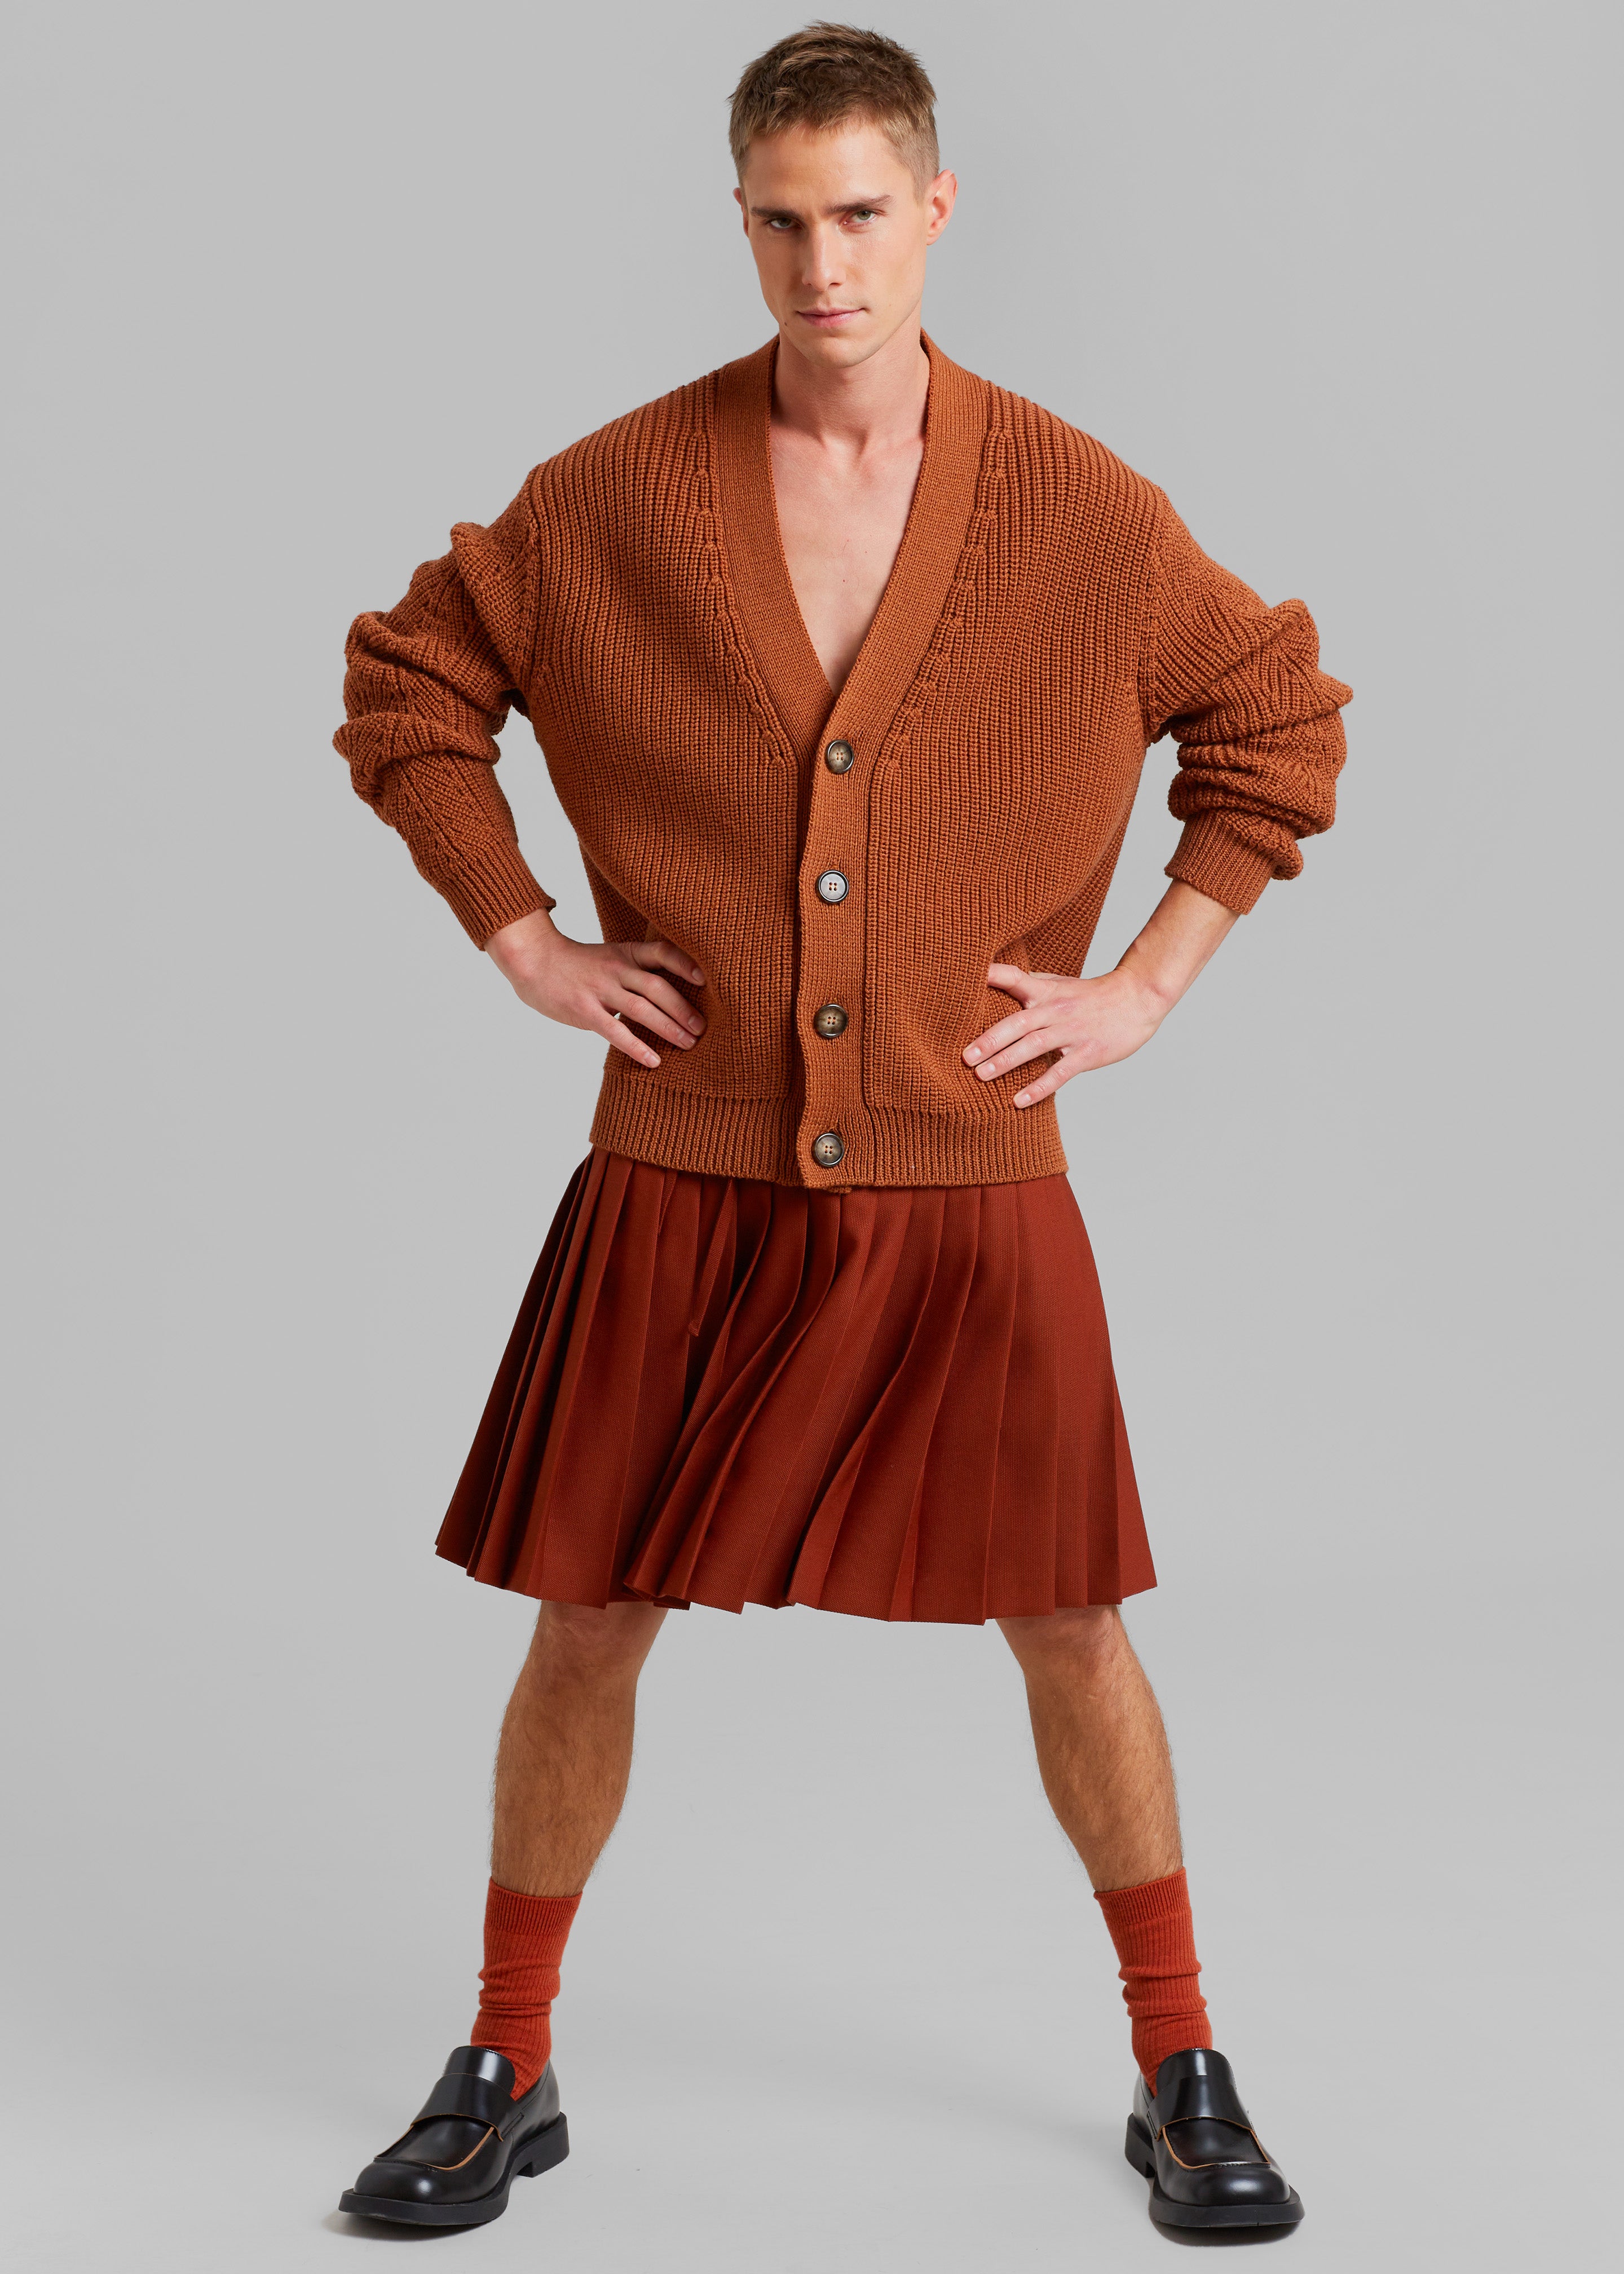 EGONLab Euphoria Skirt - Rust Wool - 7